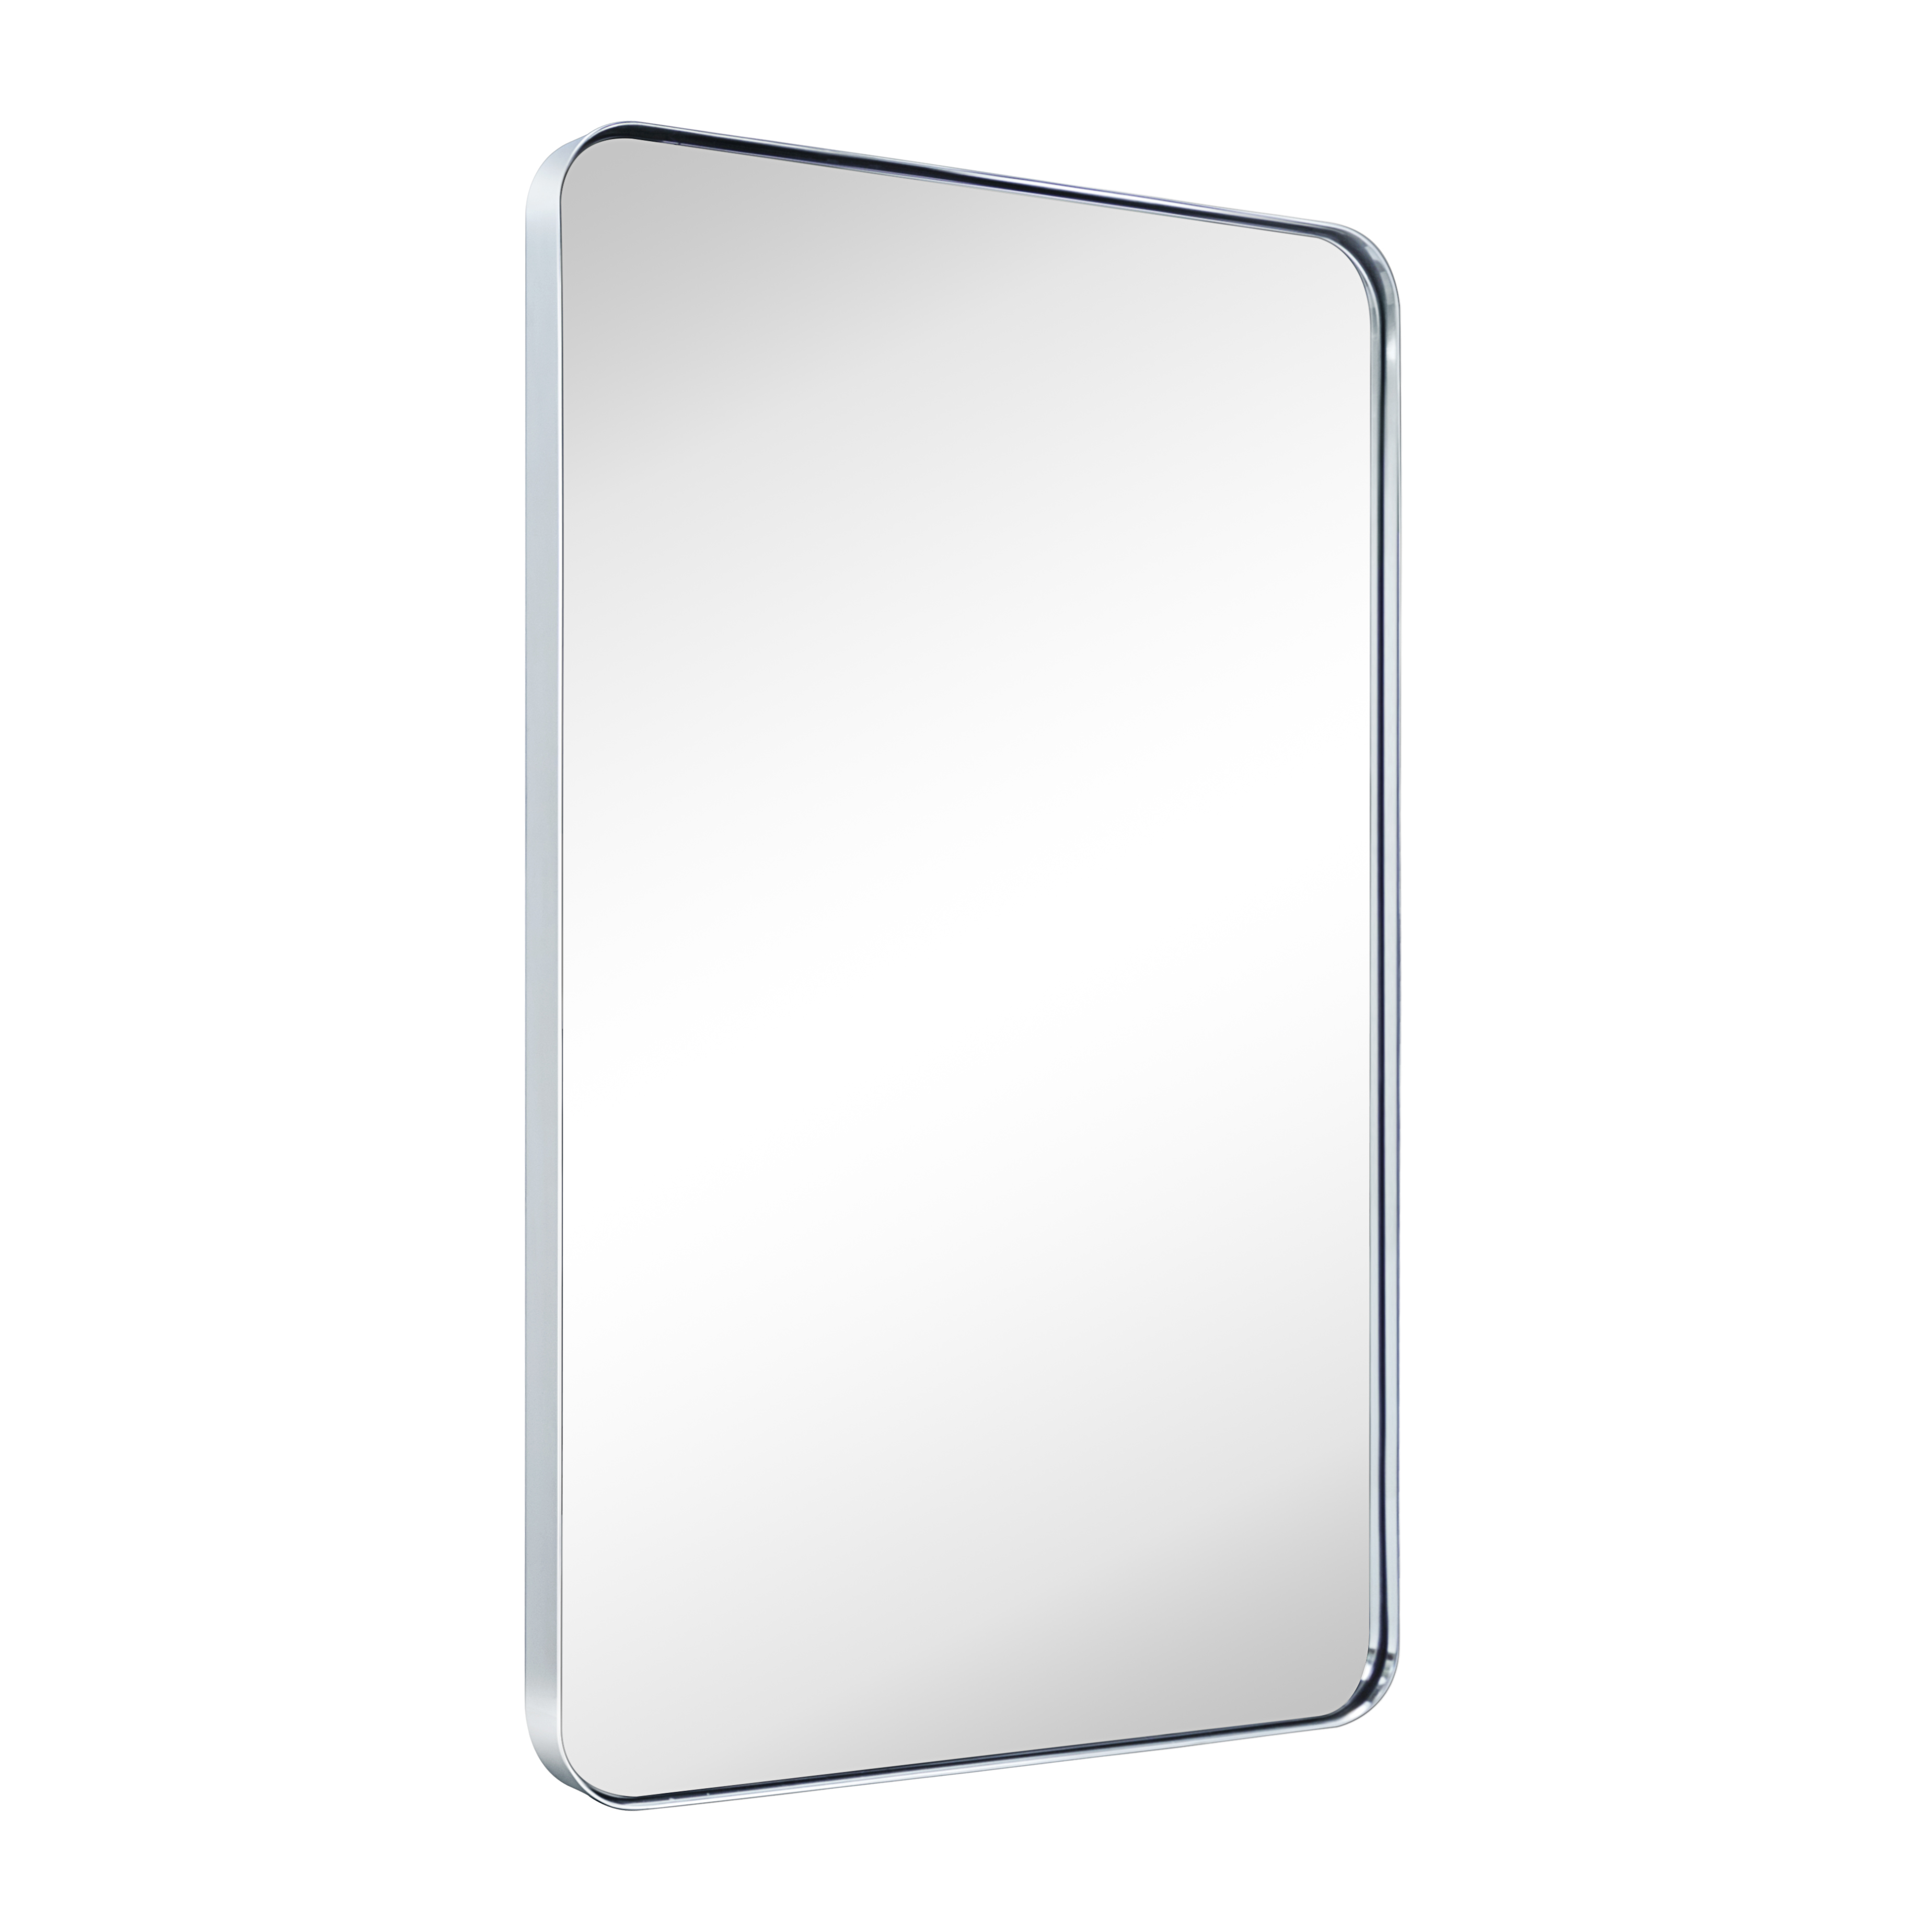 Kengston Modern & Contemporary Rectangular Bathroom Vanity Mirrors-20x30-Chrome